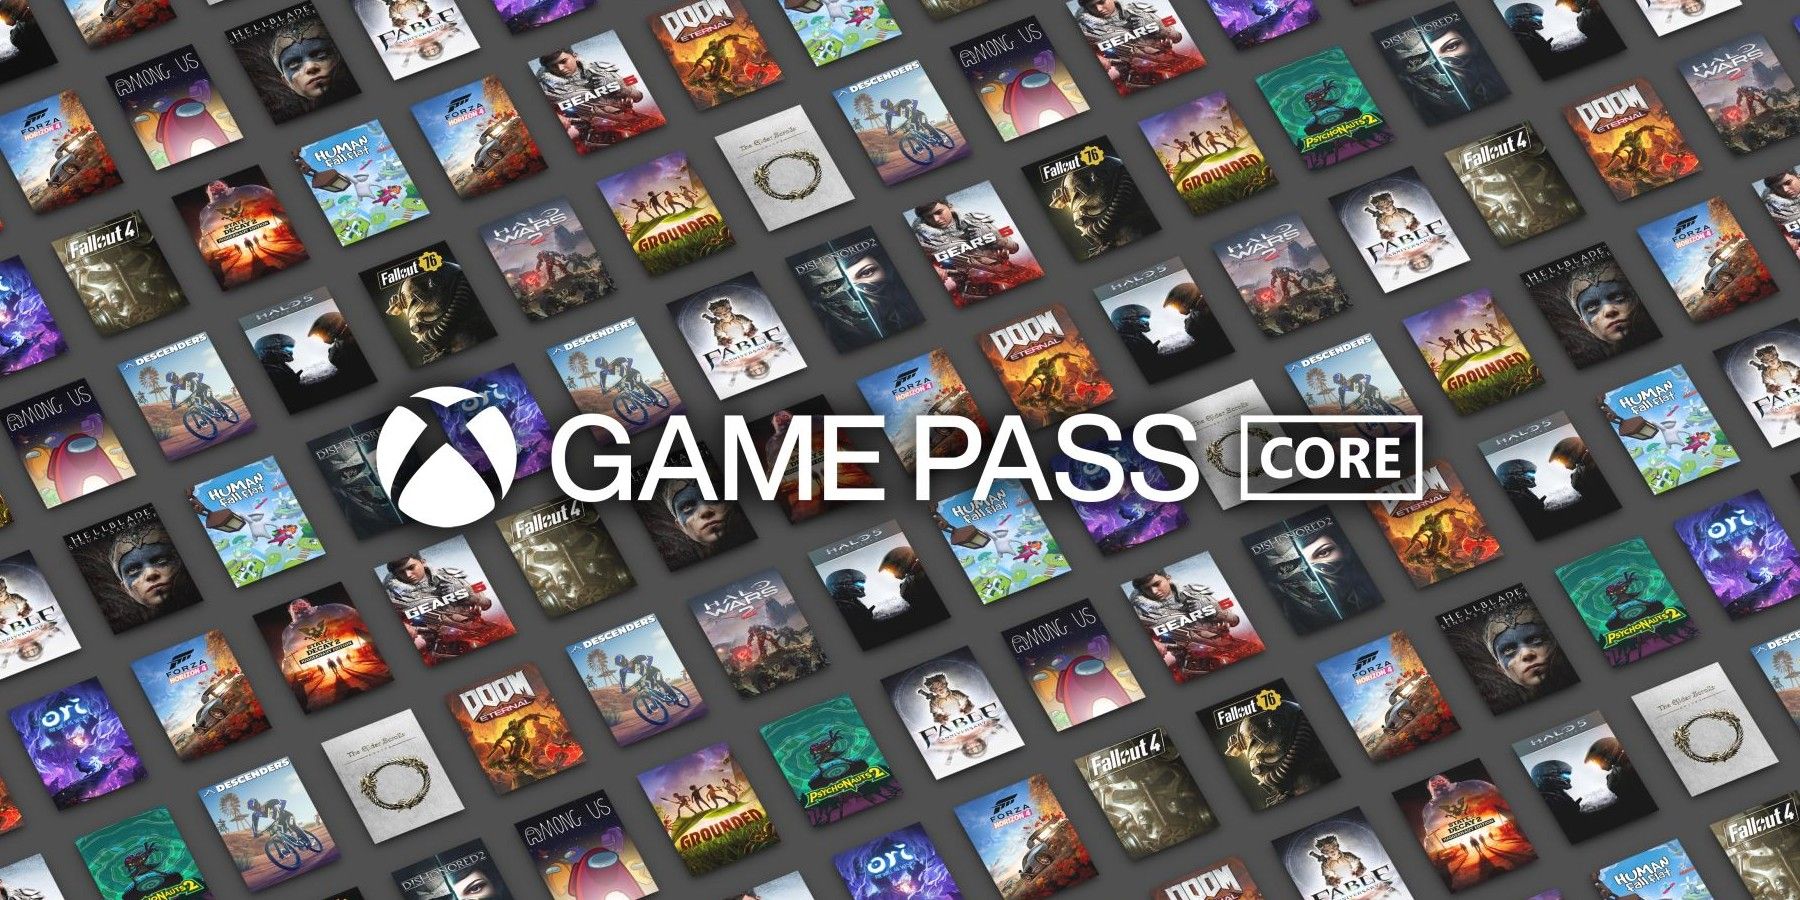 amazon, microsoft, xbox game pass core is adding 3 new games